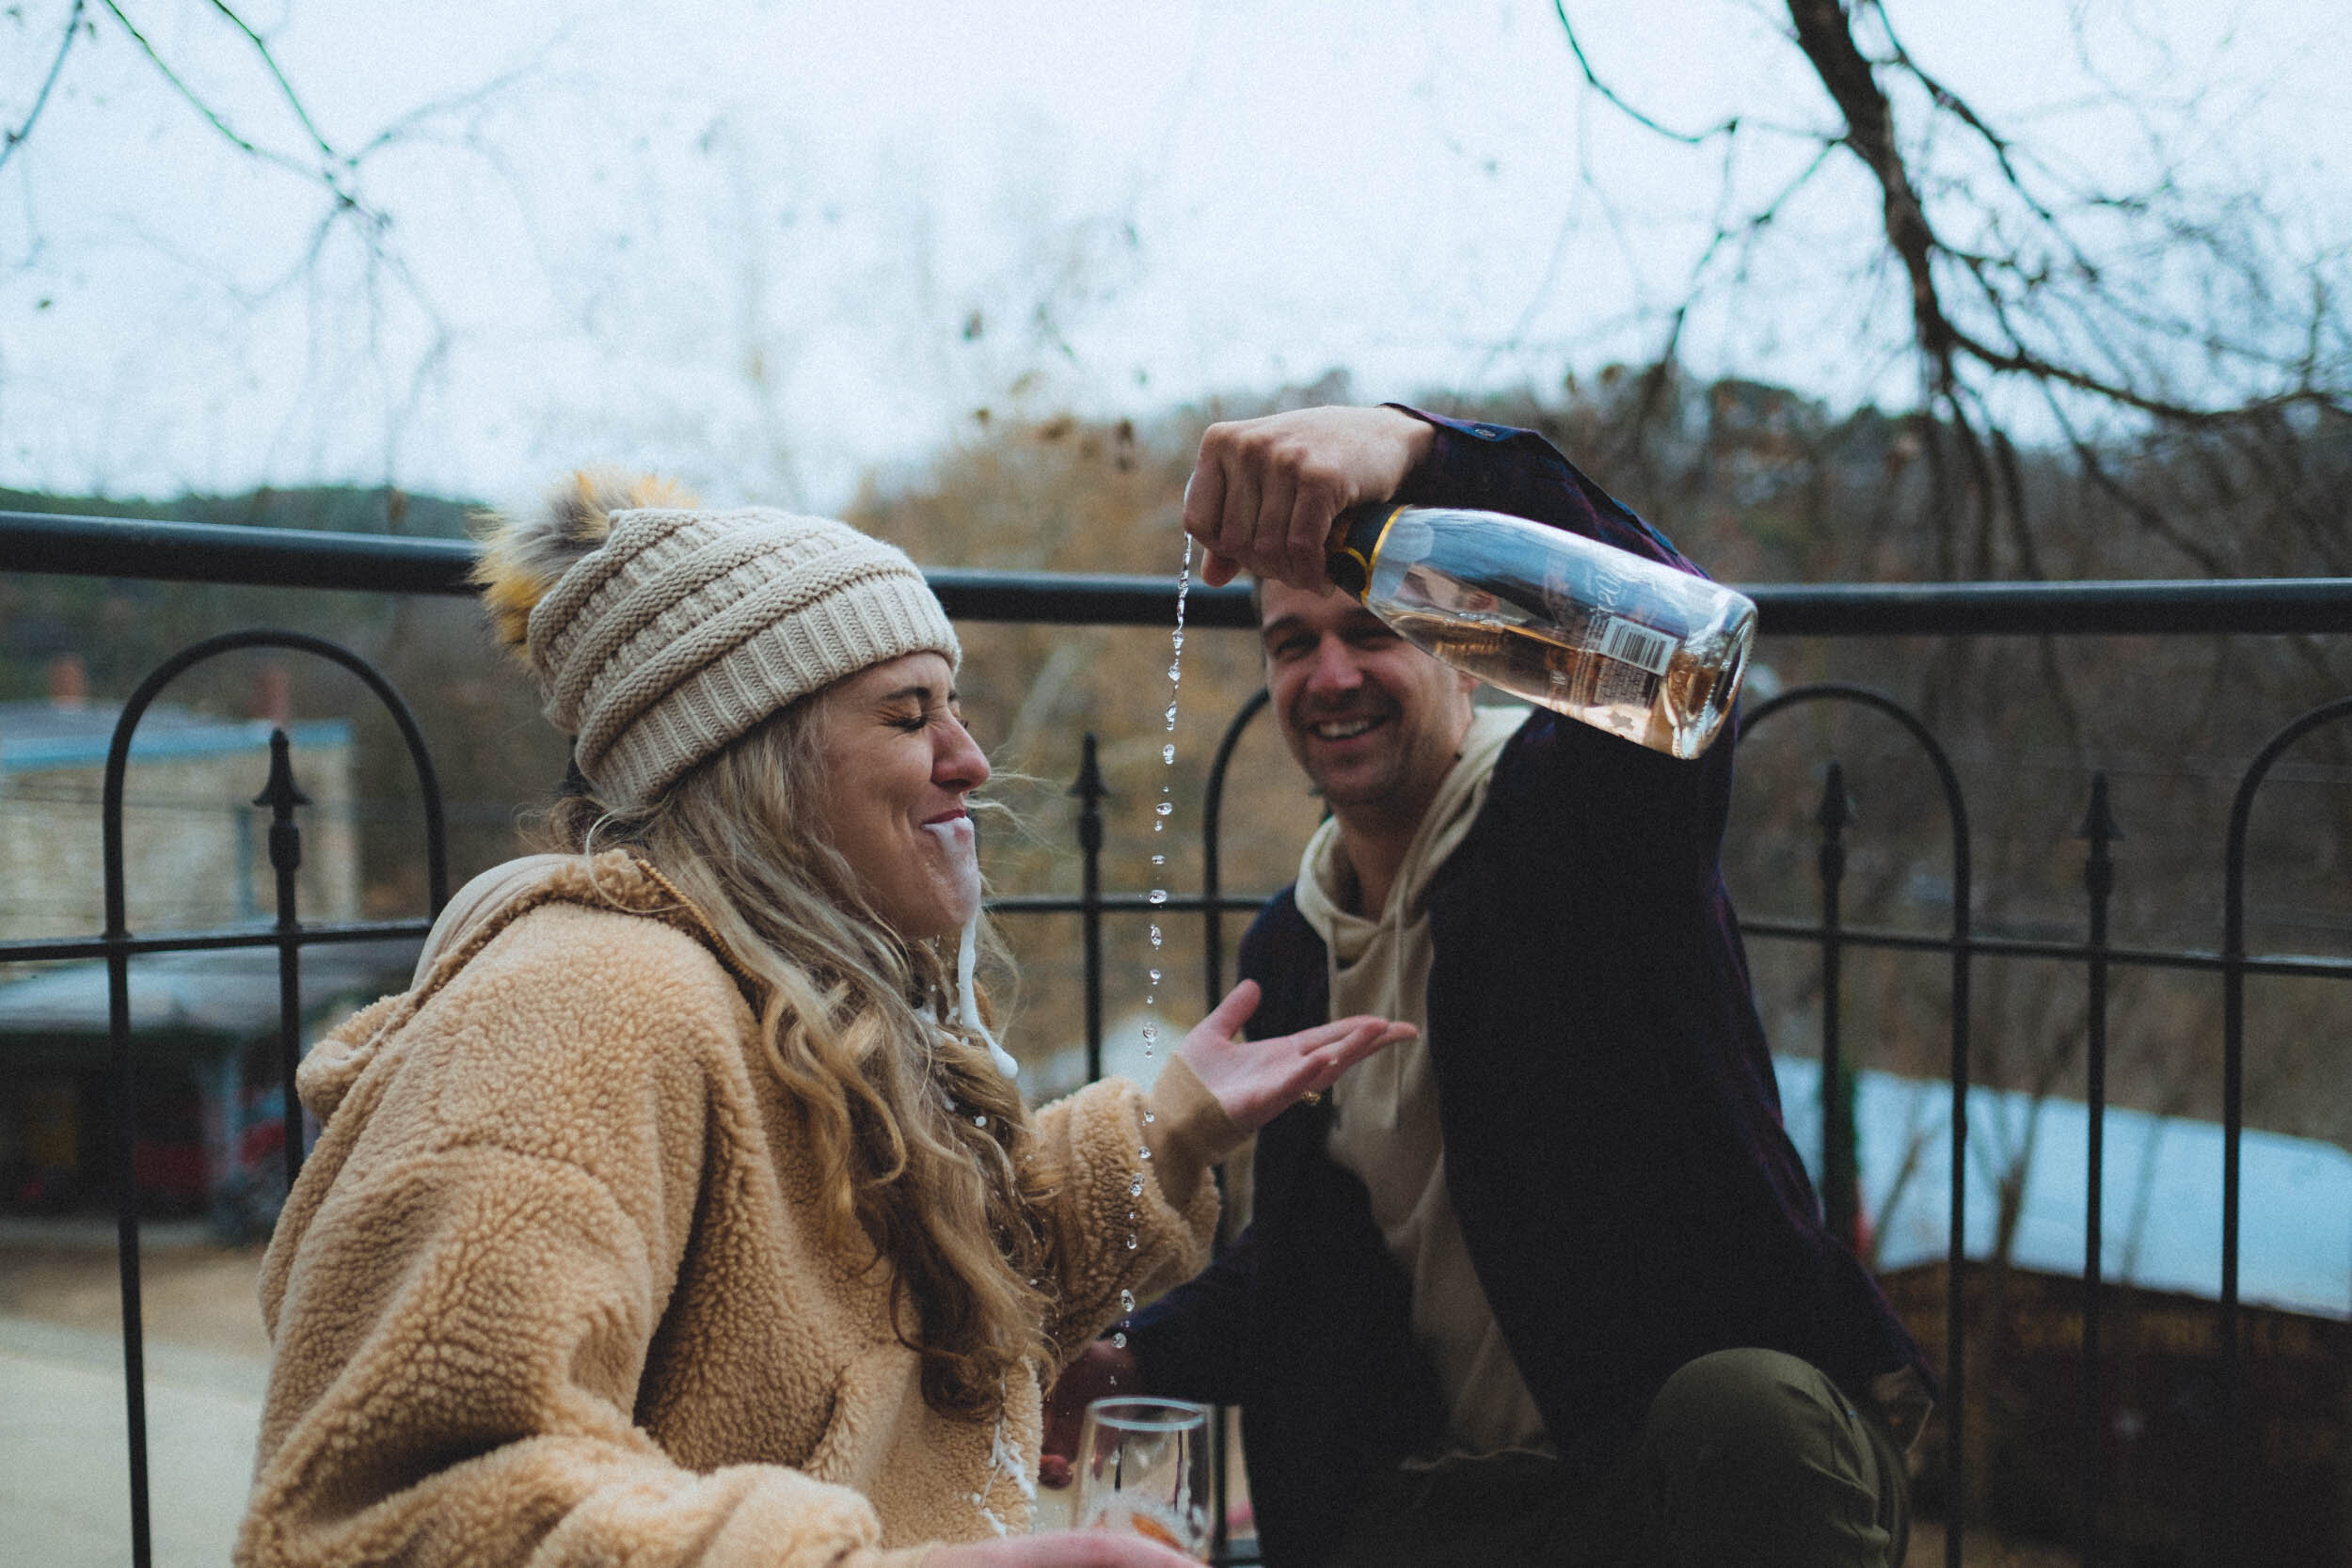 Pinterest wine pouring engagement photos